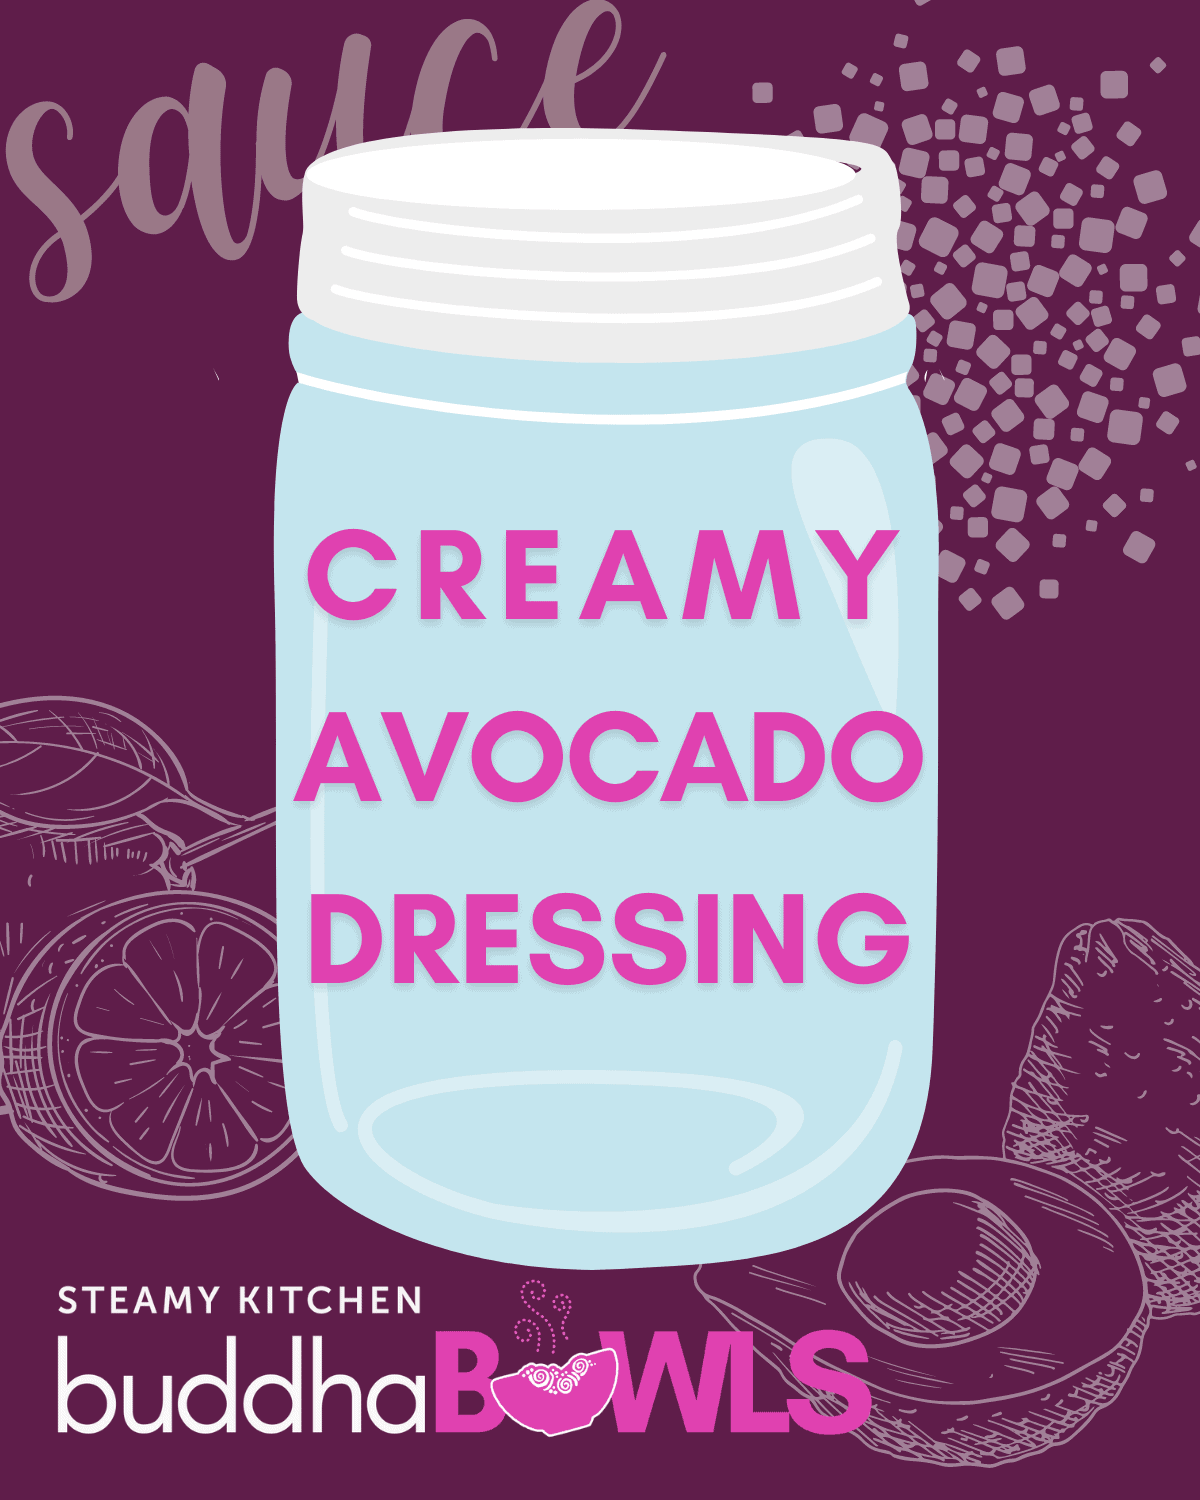 Creamy avocado dressing recipe title card